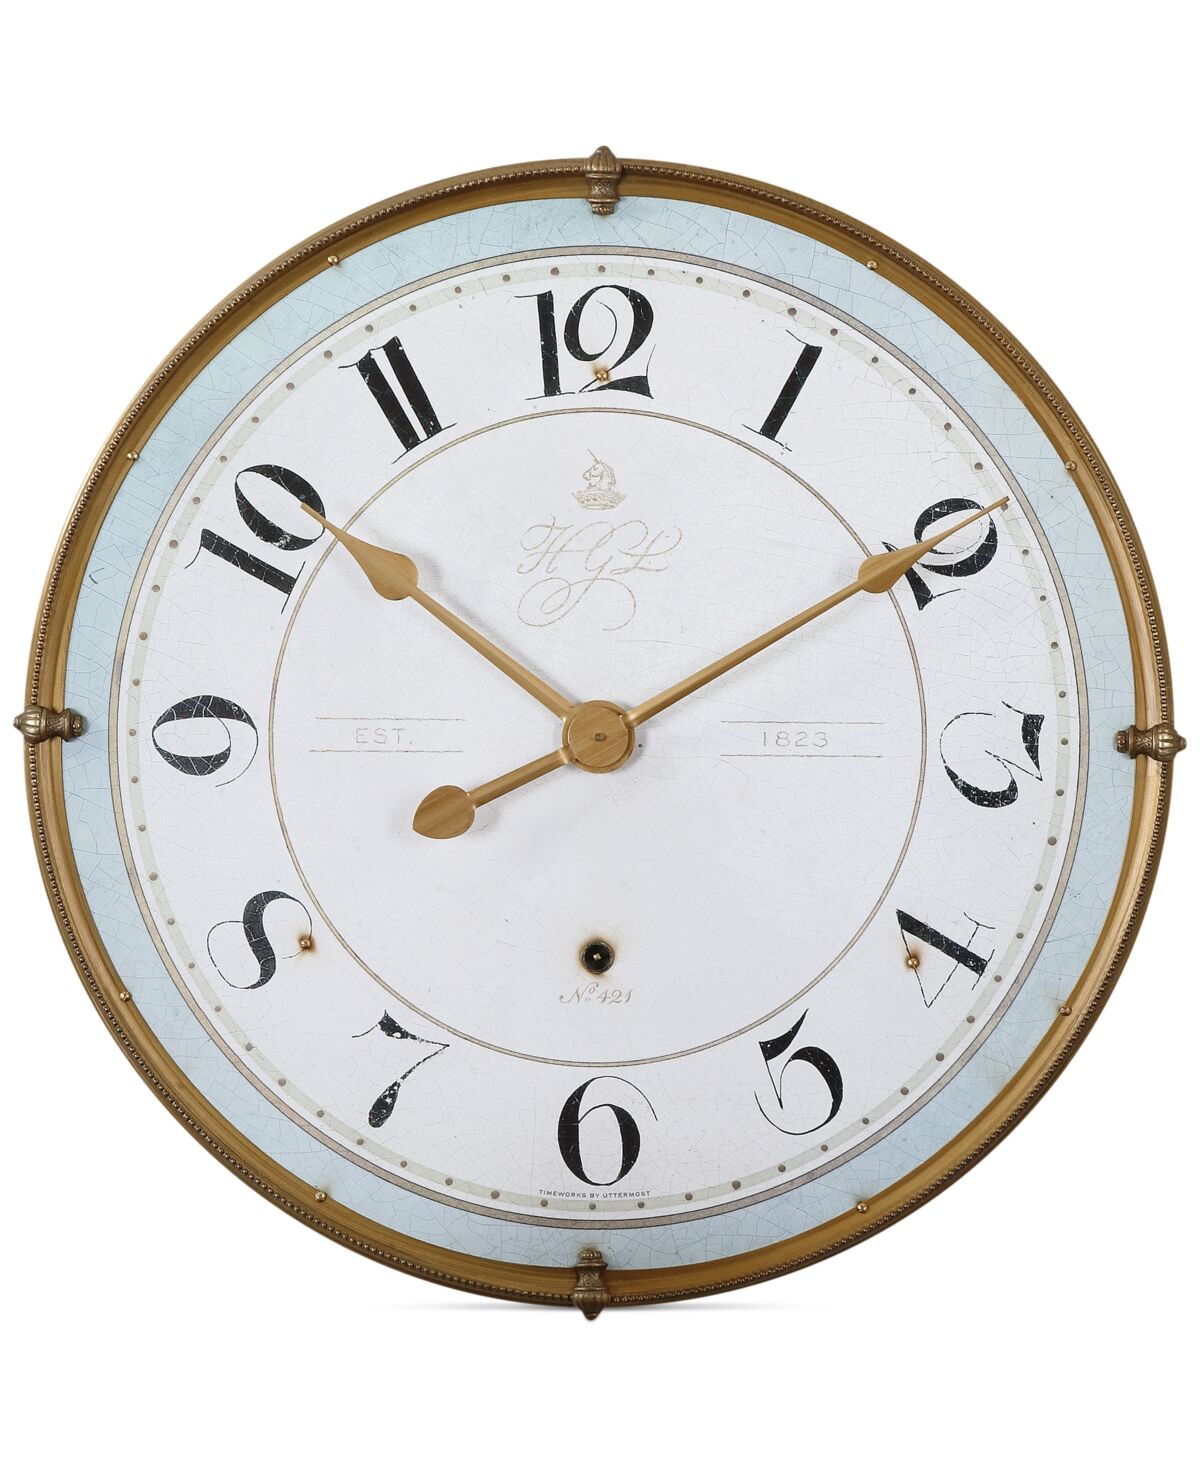 Uttermost Torriana Clock